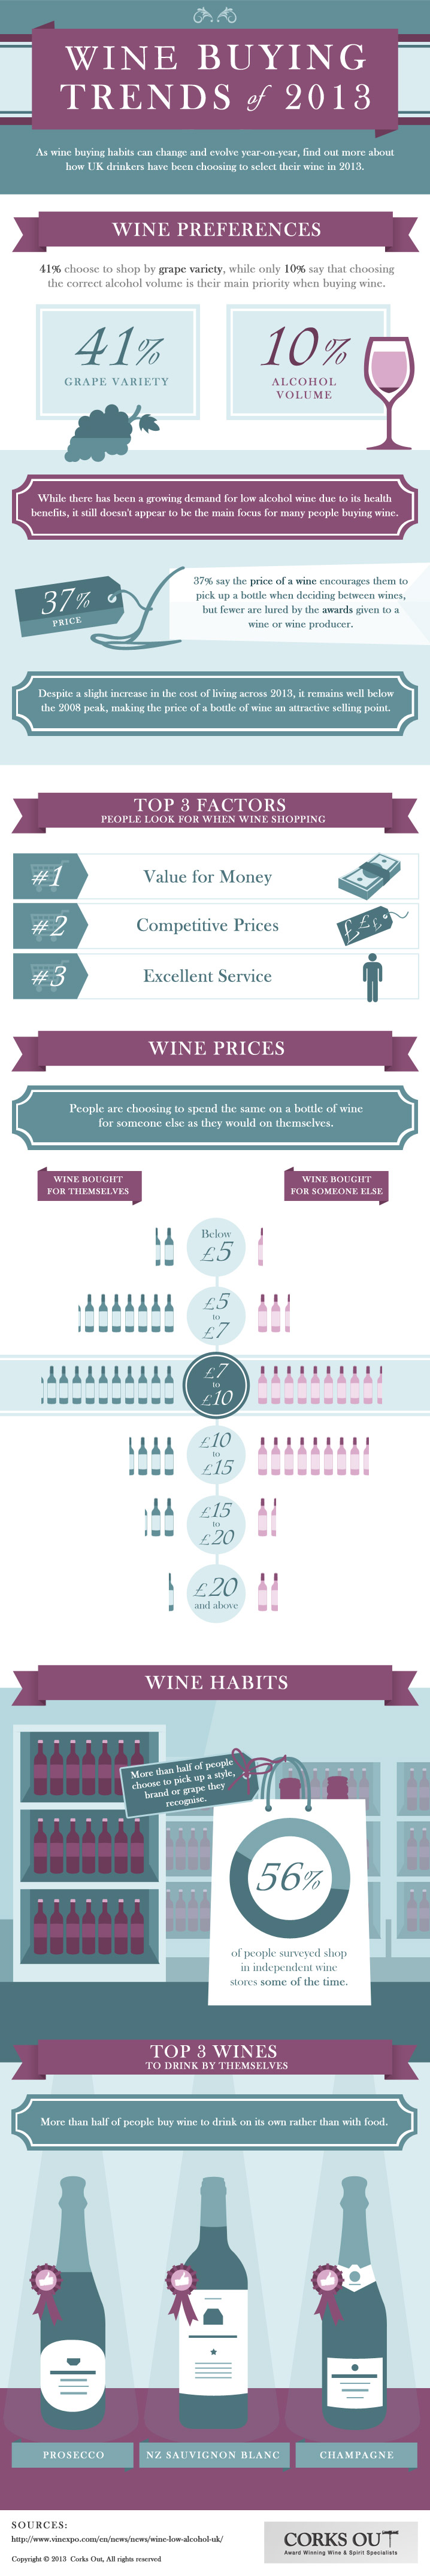 Wine Buying Habits of 2013